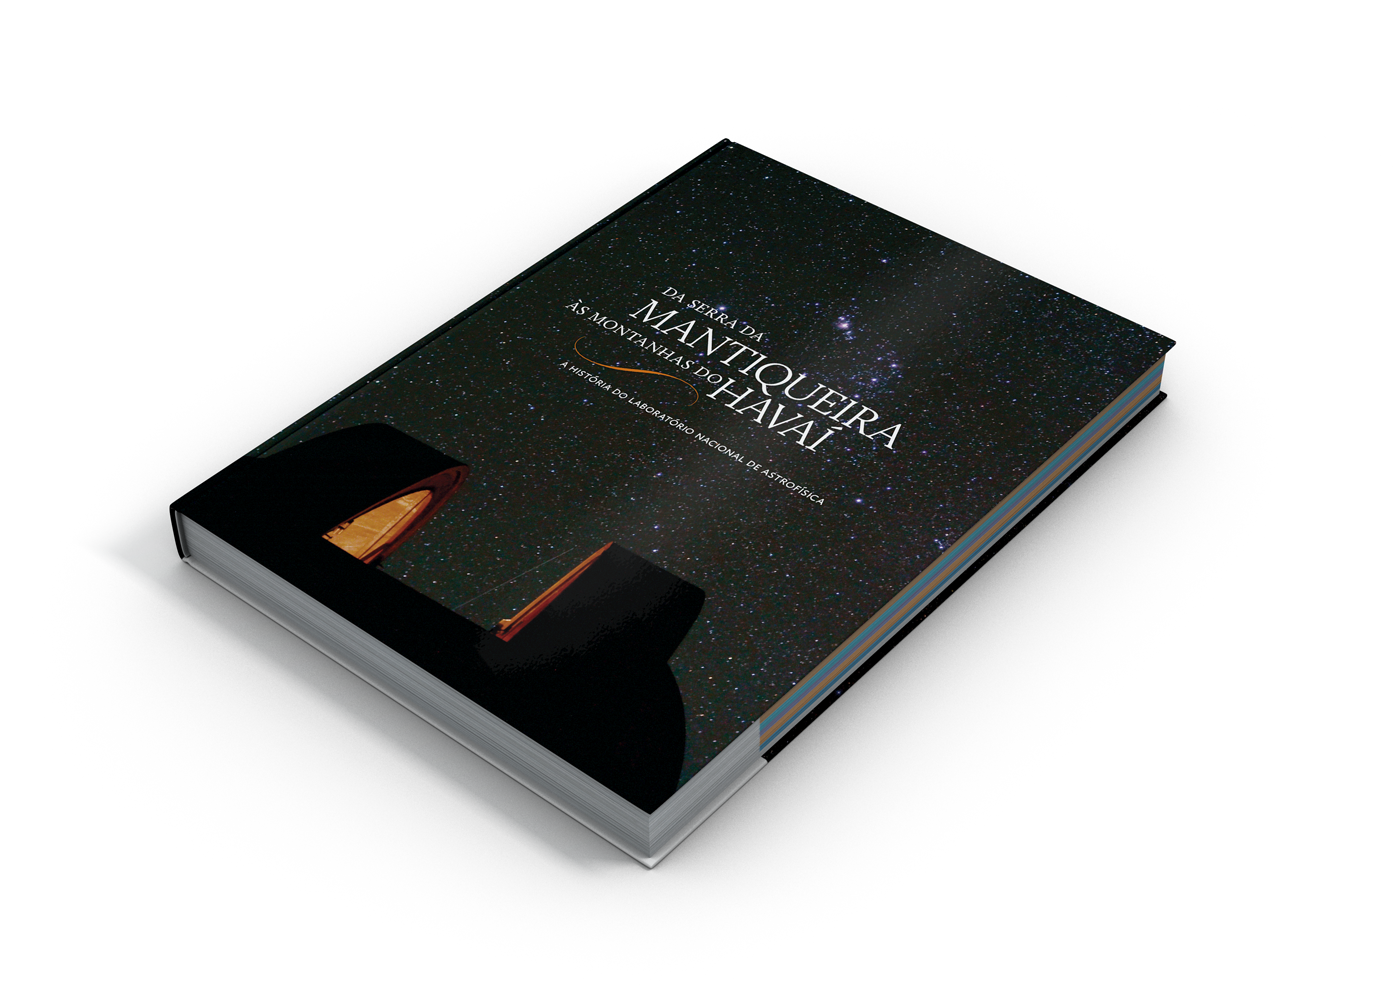 Adobe Portfolio astronomy Astrophysics observatory Telescope stars galaxy nebula Space  Brazil Government lna print editorial Layout hardcover